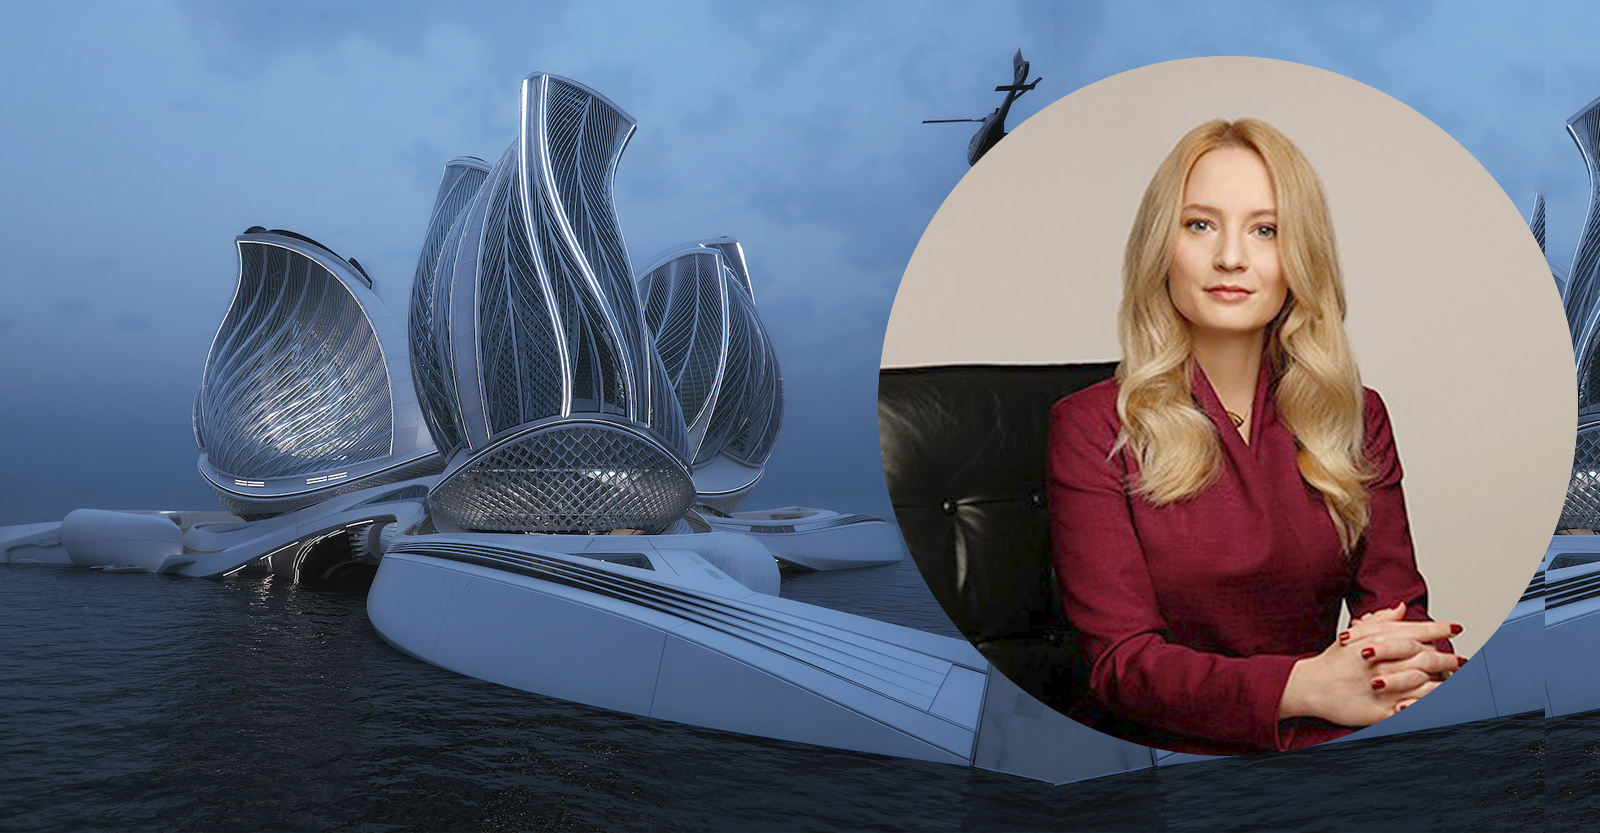 Fantastický svetový úspech: Slovenská dizajnérka Lenka Petráková získala ocenenie za skvostný „8. kontinent“